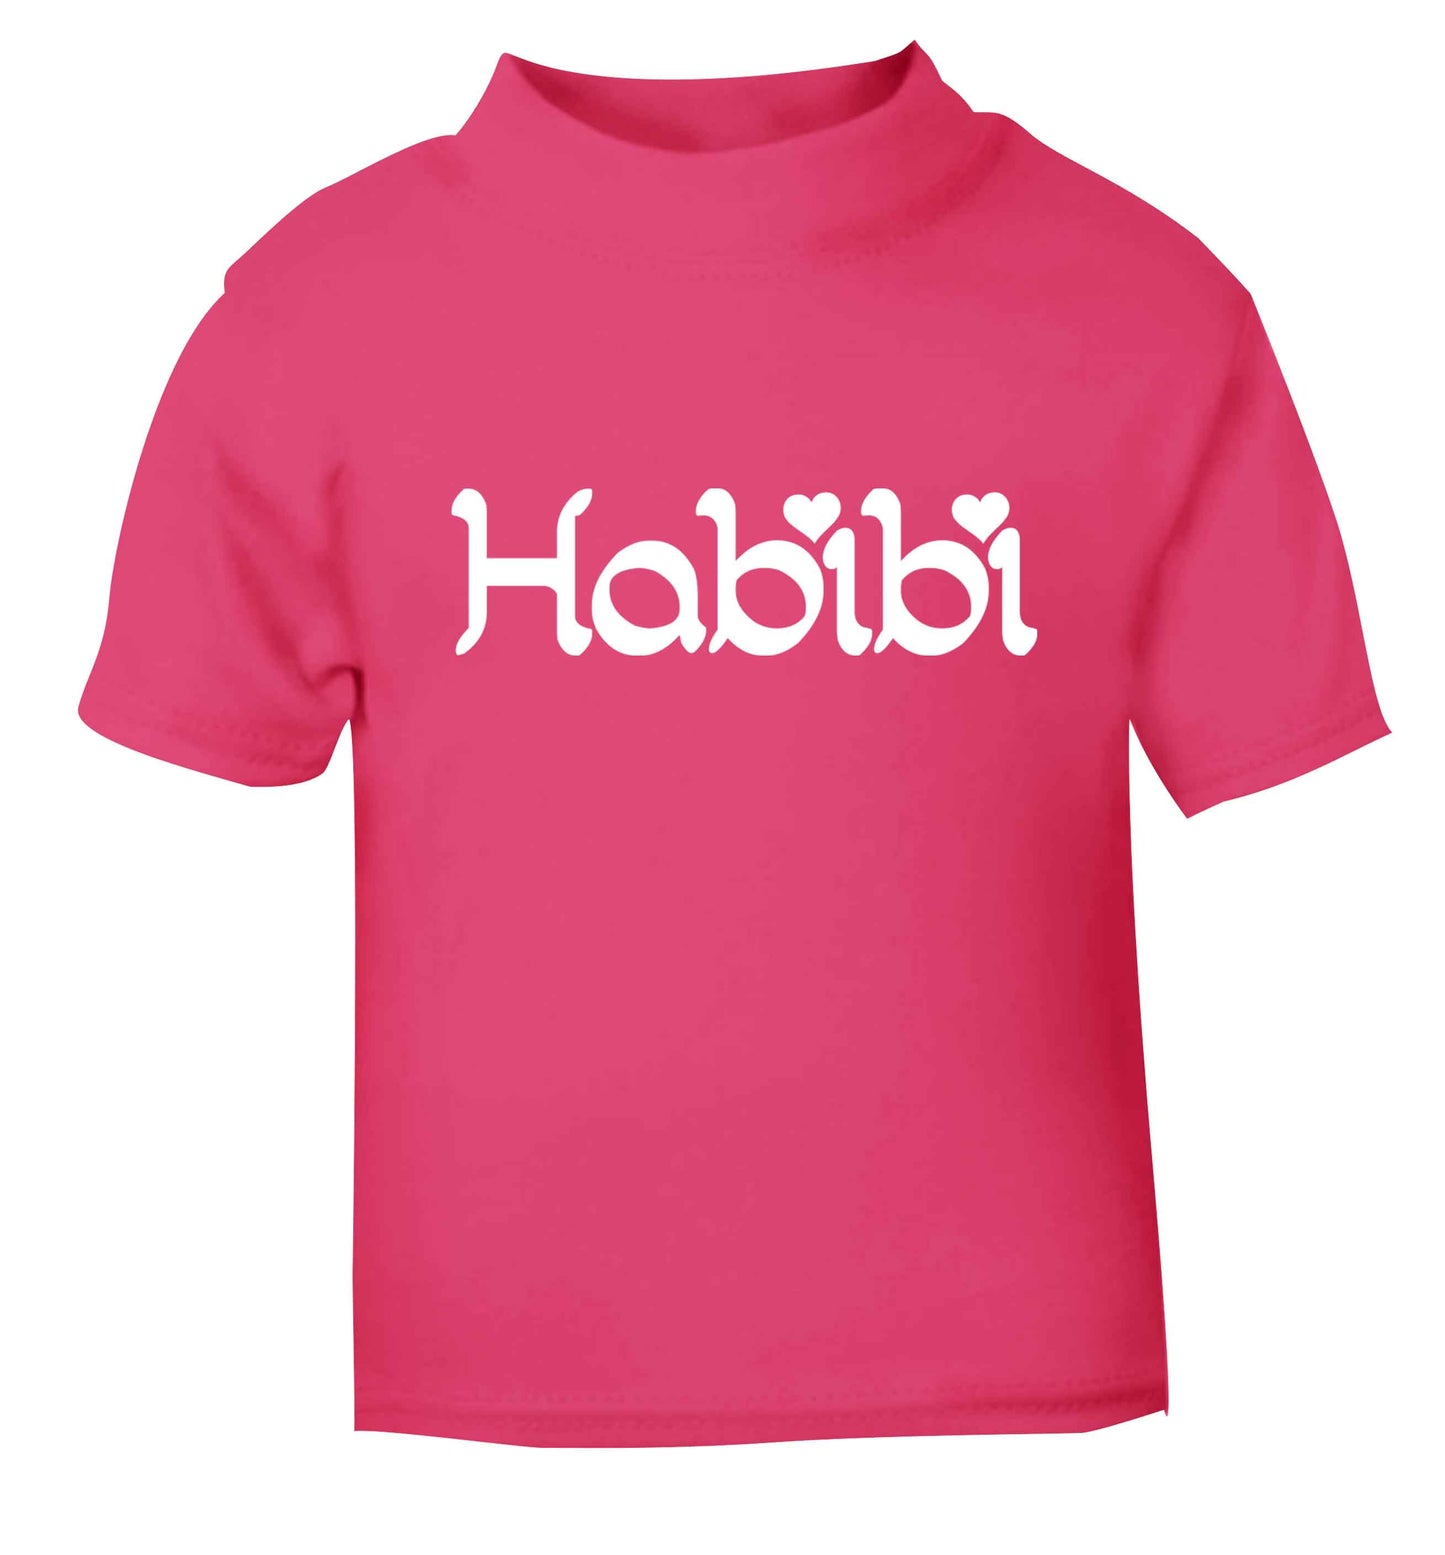 Habibi pink baby toddler Tshirt 2 Years